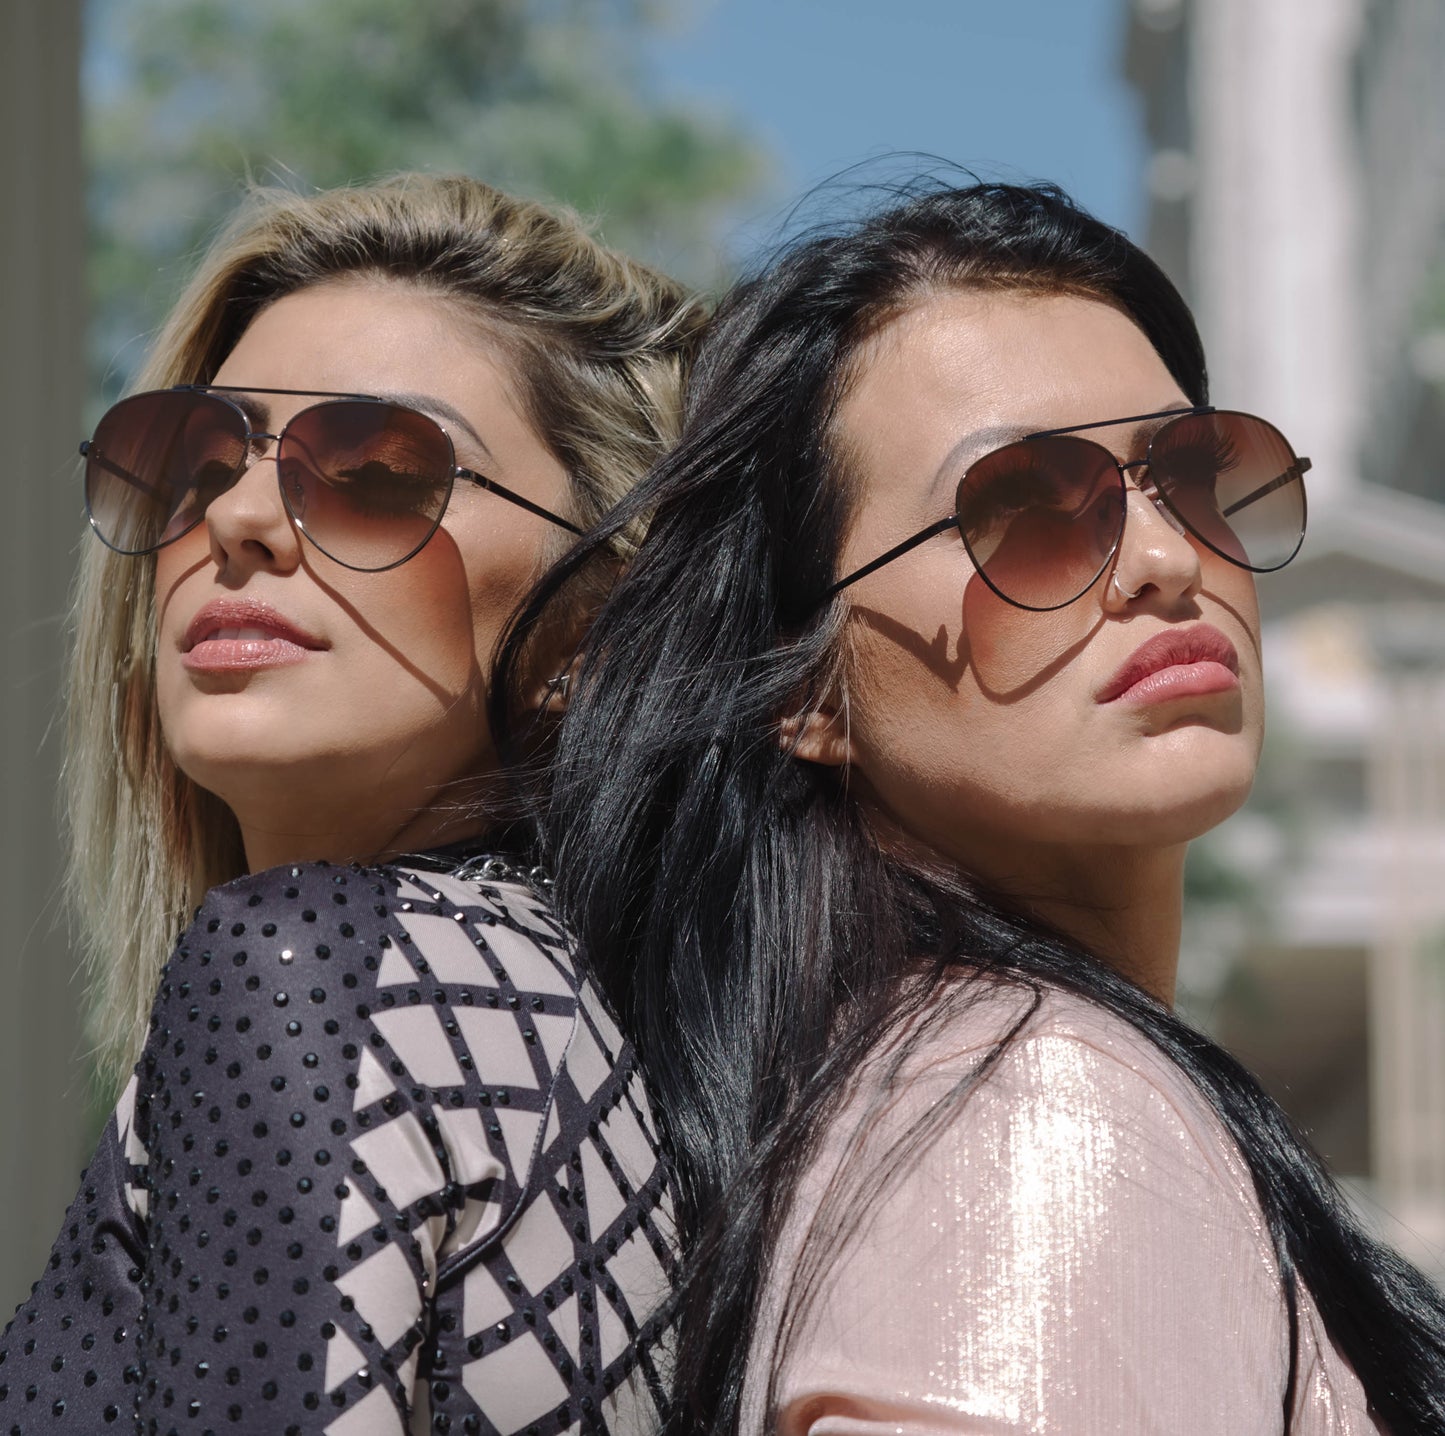 TopFoxx - The Besties Faded Brown - Women's Aviator Sunglasses - Designer Pilot Sunnies - Models